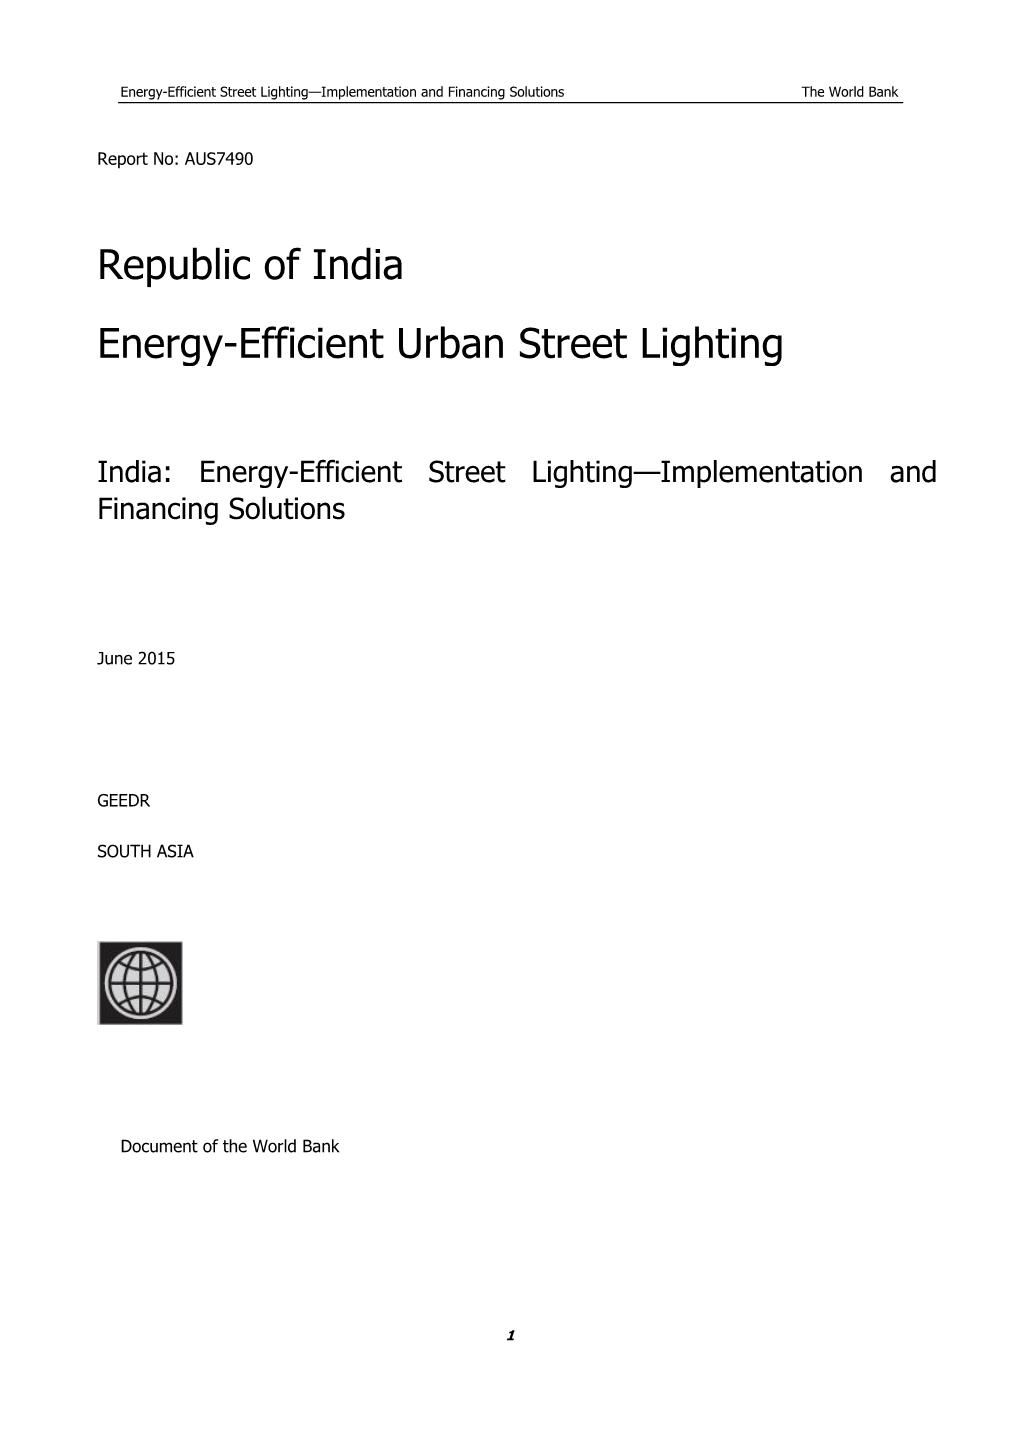 Republic of India Energy-Efficient Urban Street Lighting